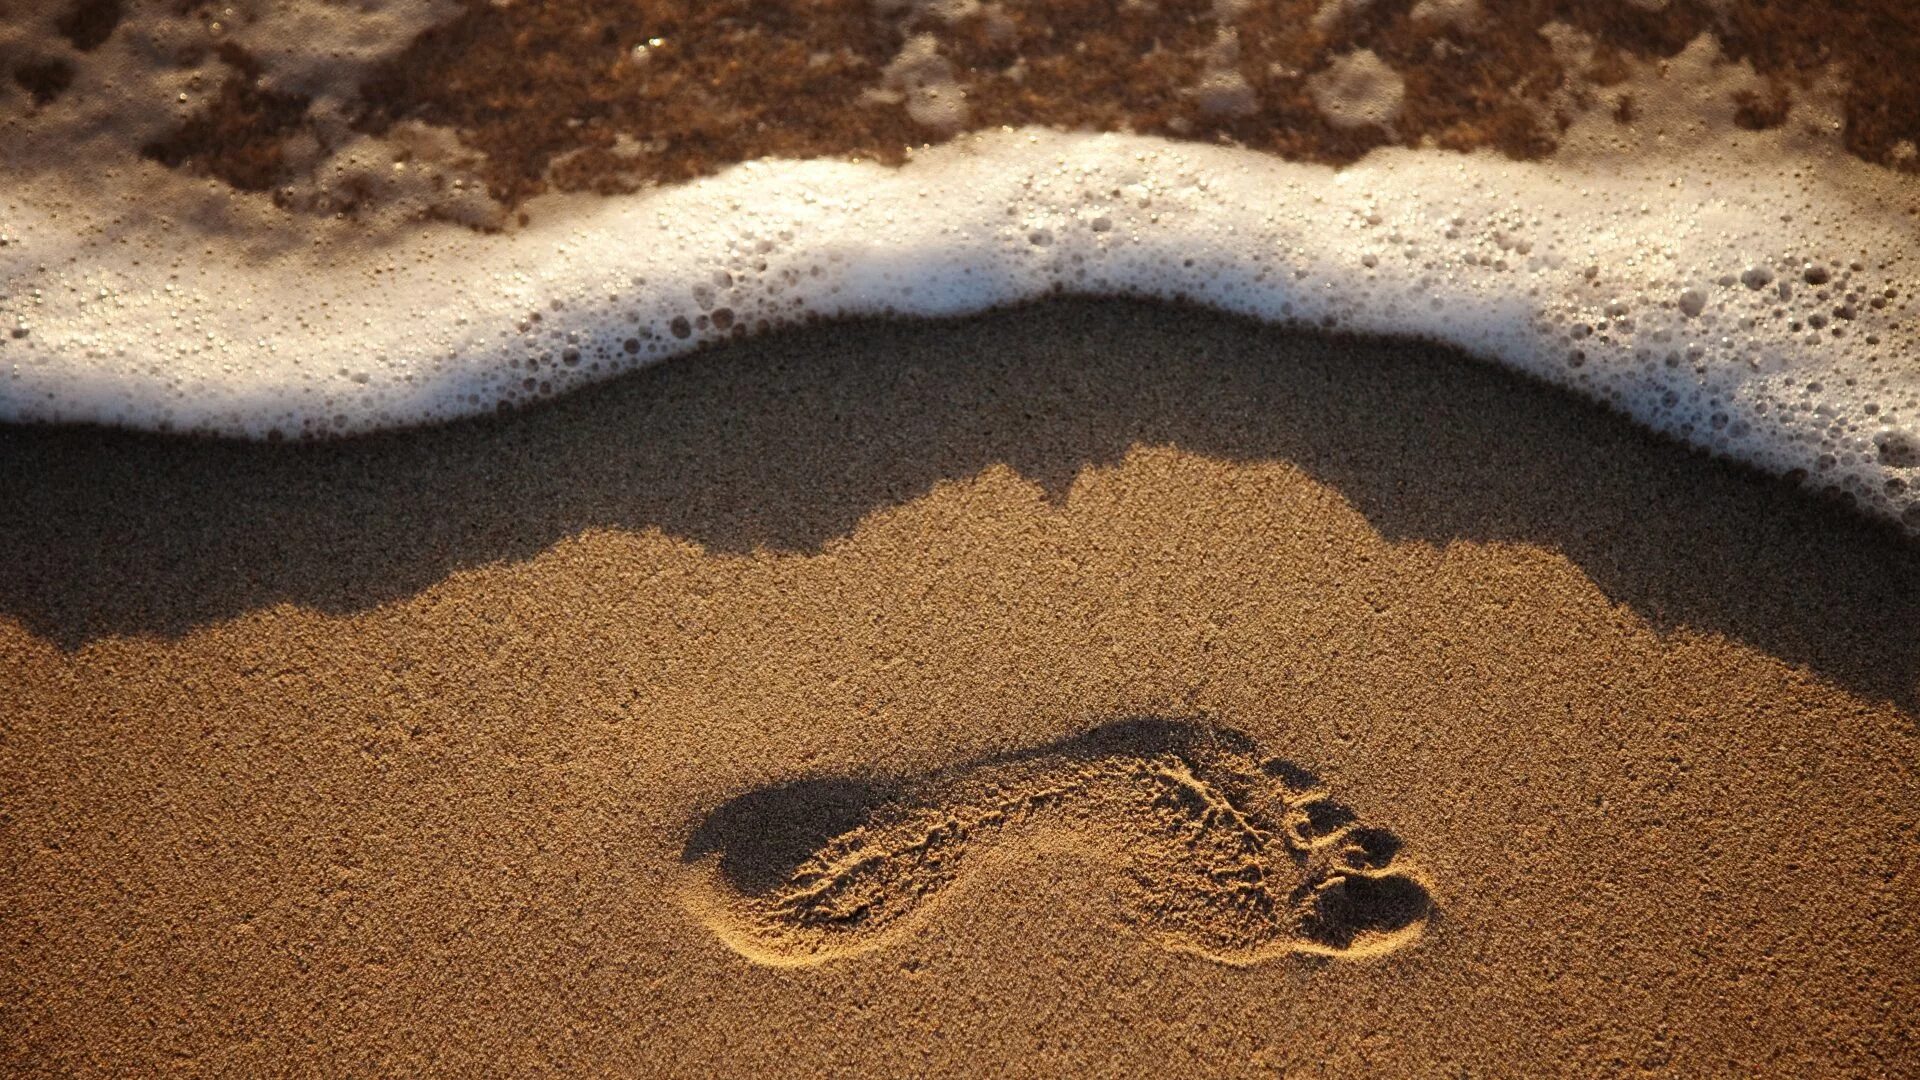 Там следы. Следы на песке. Следы человека на песке. Отпечаток ноги на песке. Следы ног на песке.